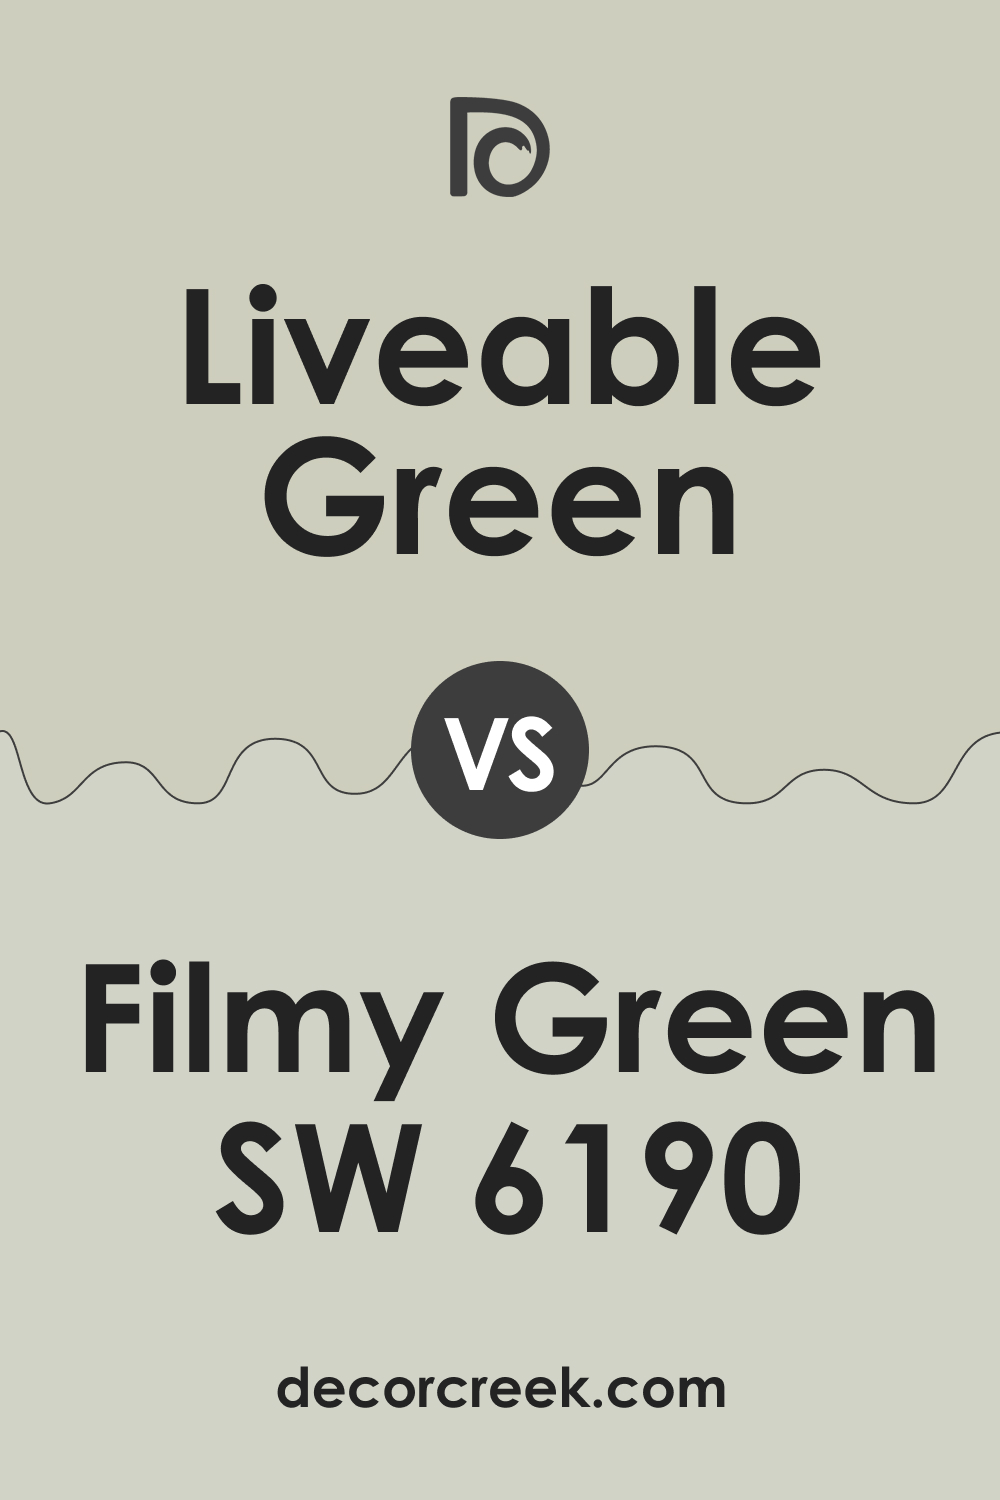 Liveable Green vs Filmy Green